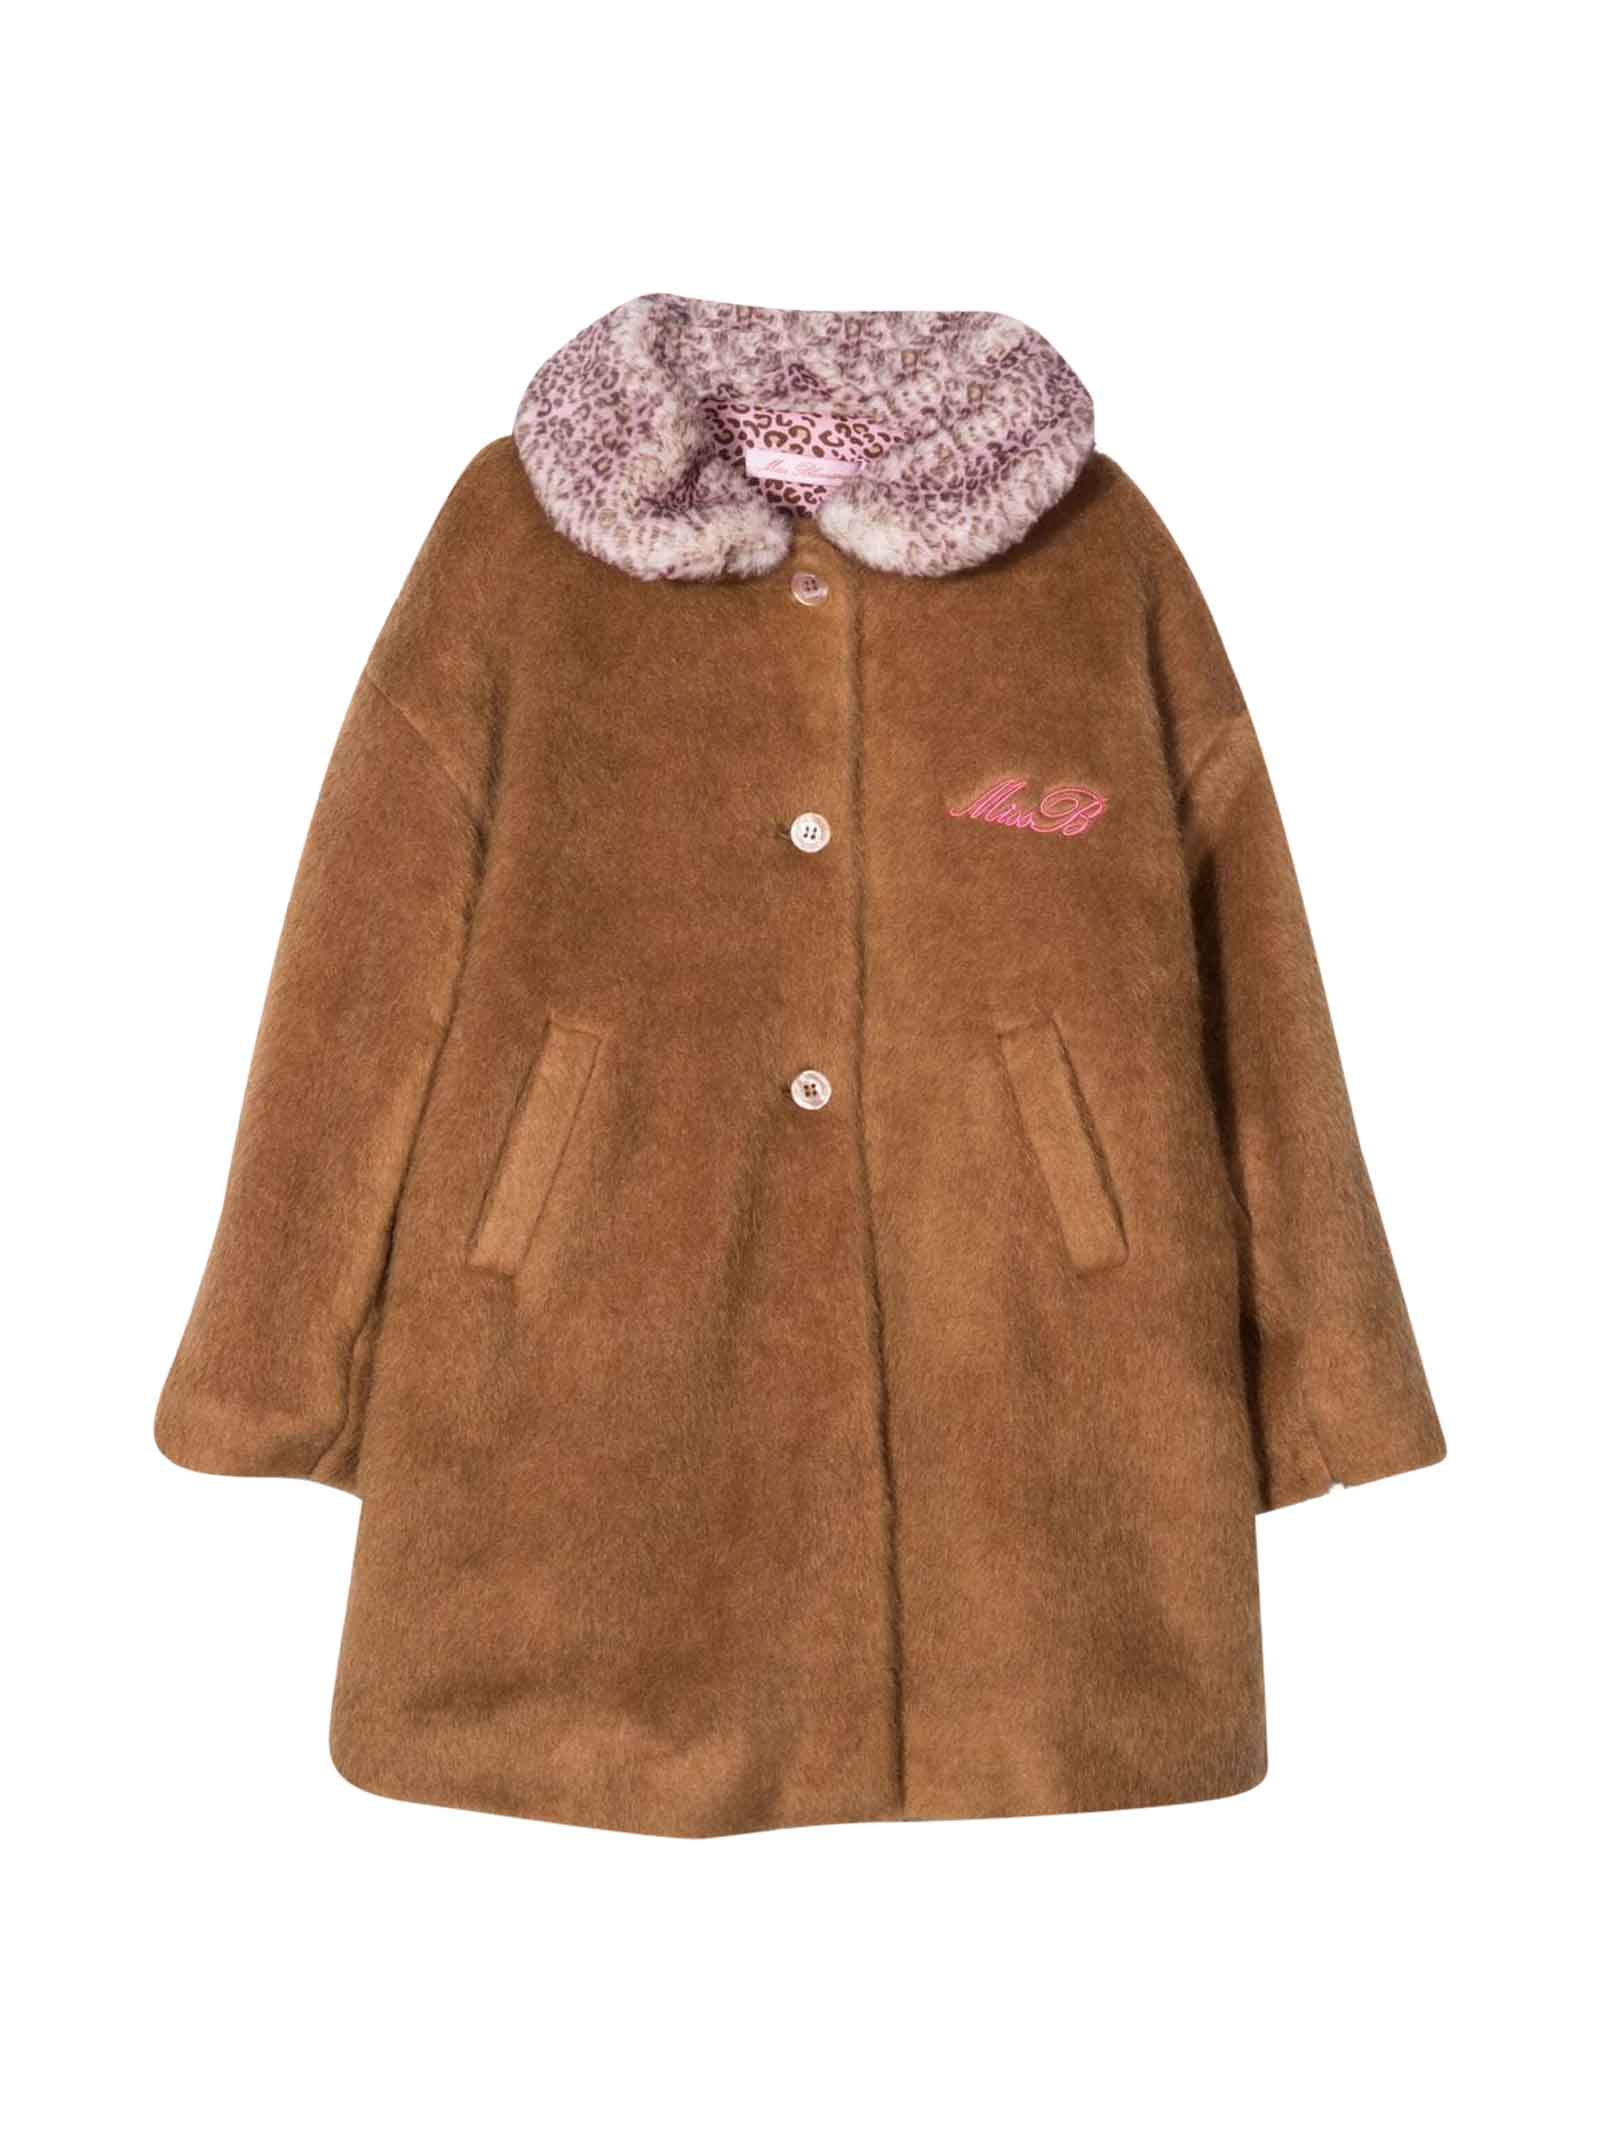 Miss Blumarine Girl Brown Coat